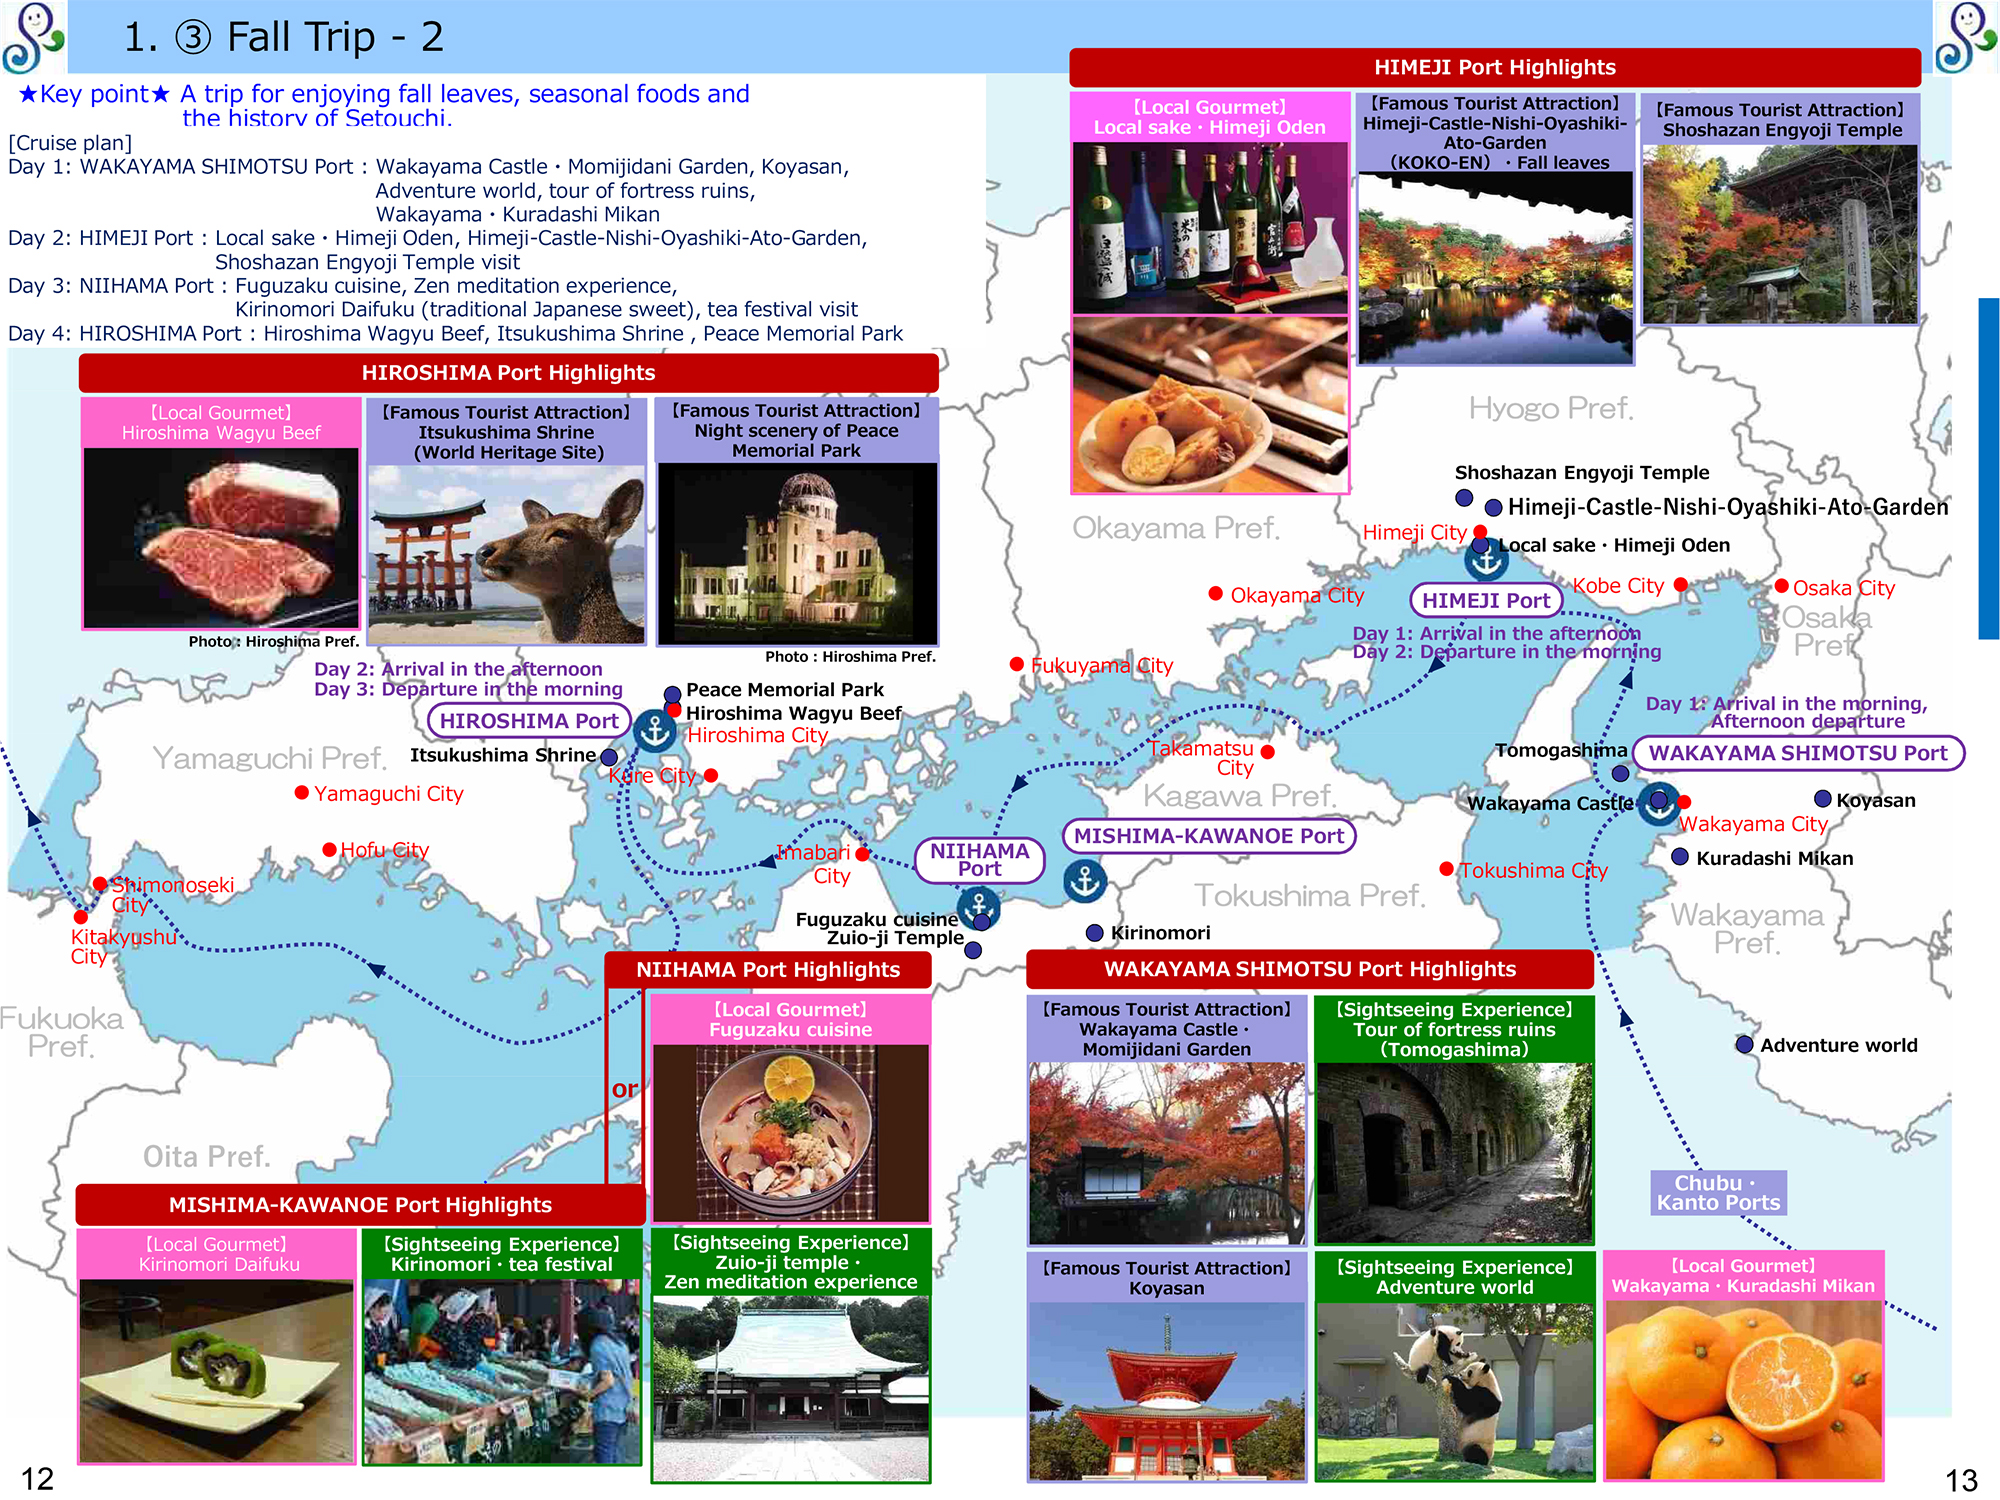 Seto Inland Sea Cruise Guide-Autumn Tour